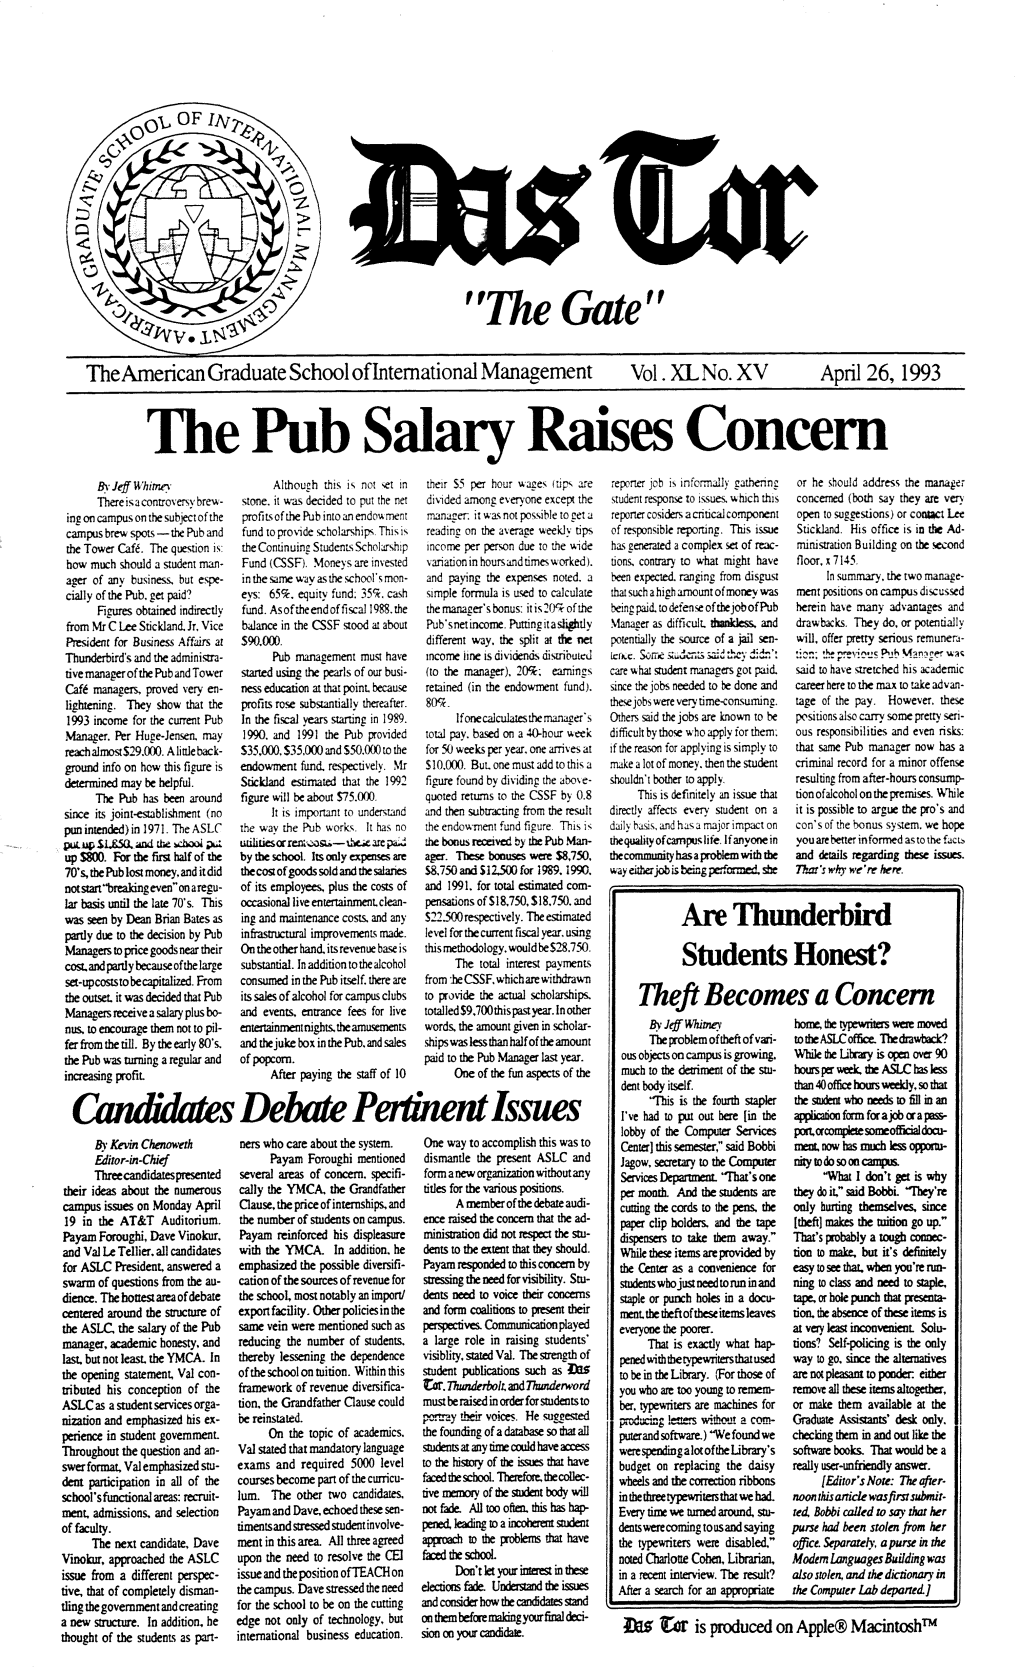 The Pub Salary Raises Concern